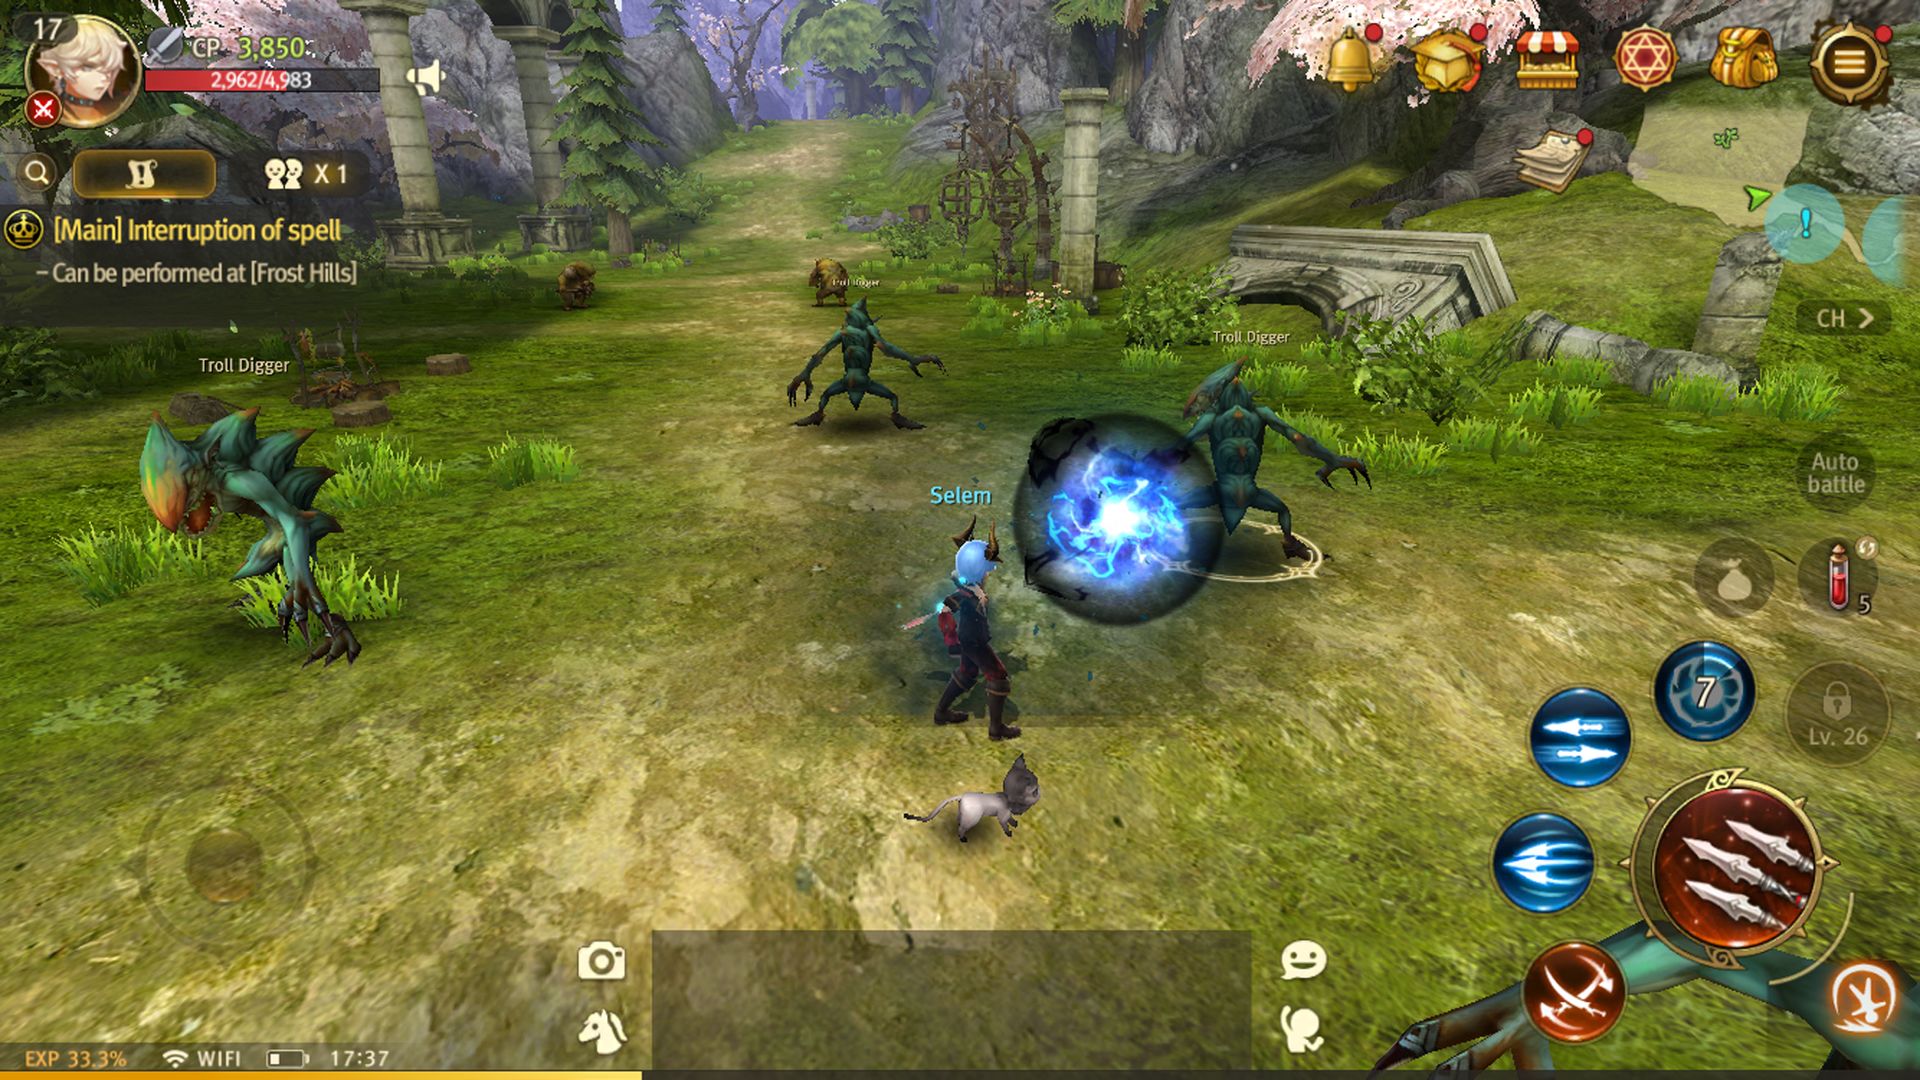 Screenshot of World of Dragon Nest